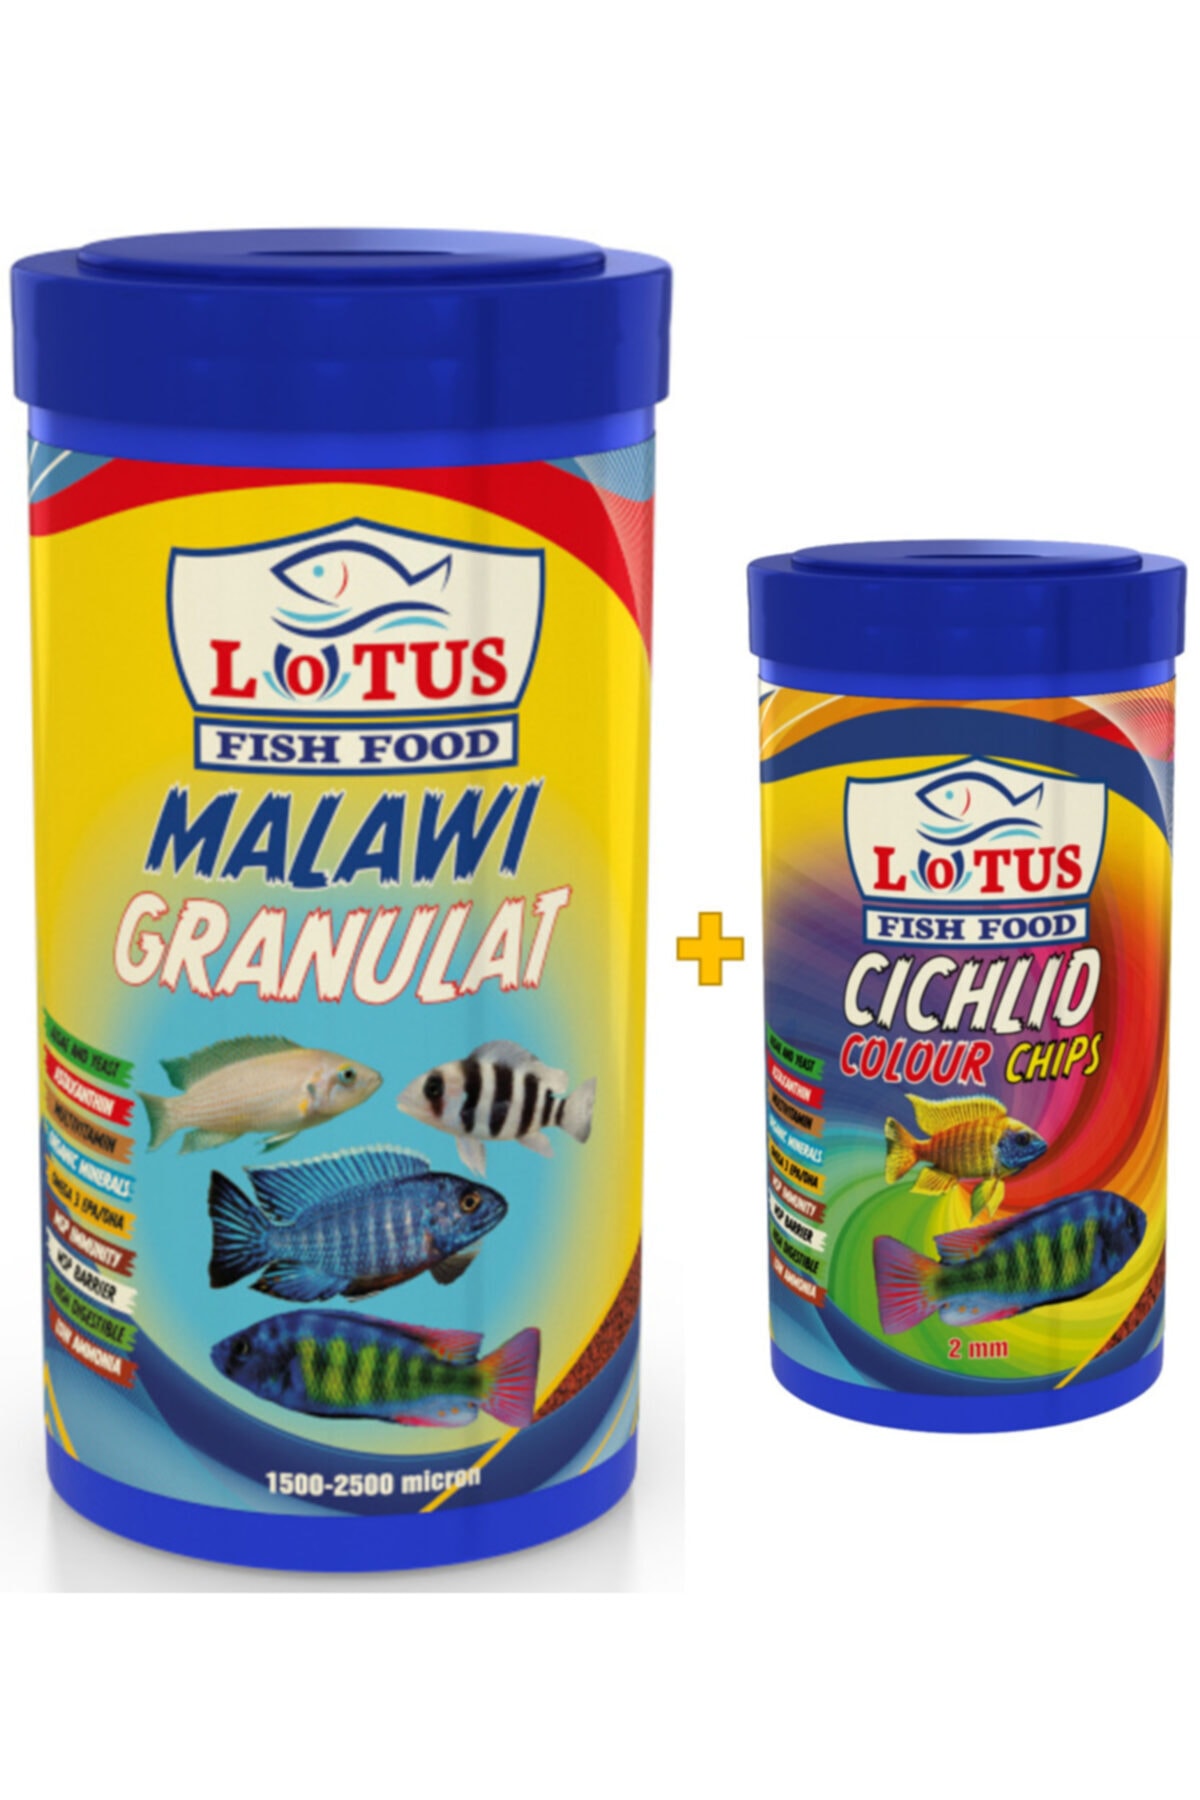 Lotus Malawi Granulat 1000 Ml Ve Cichlid Colour Chips 250 Ml Balık Yemi